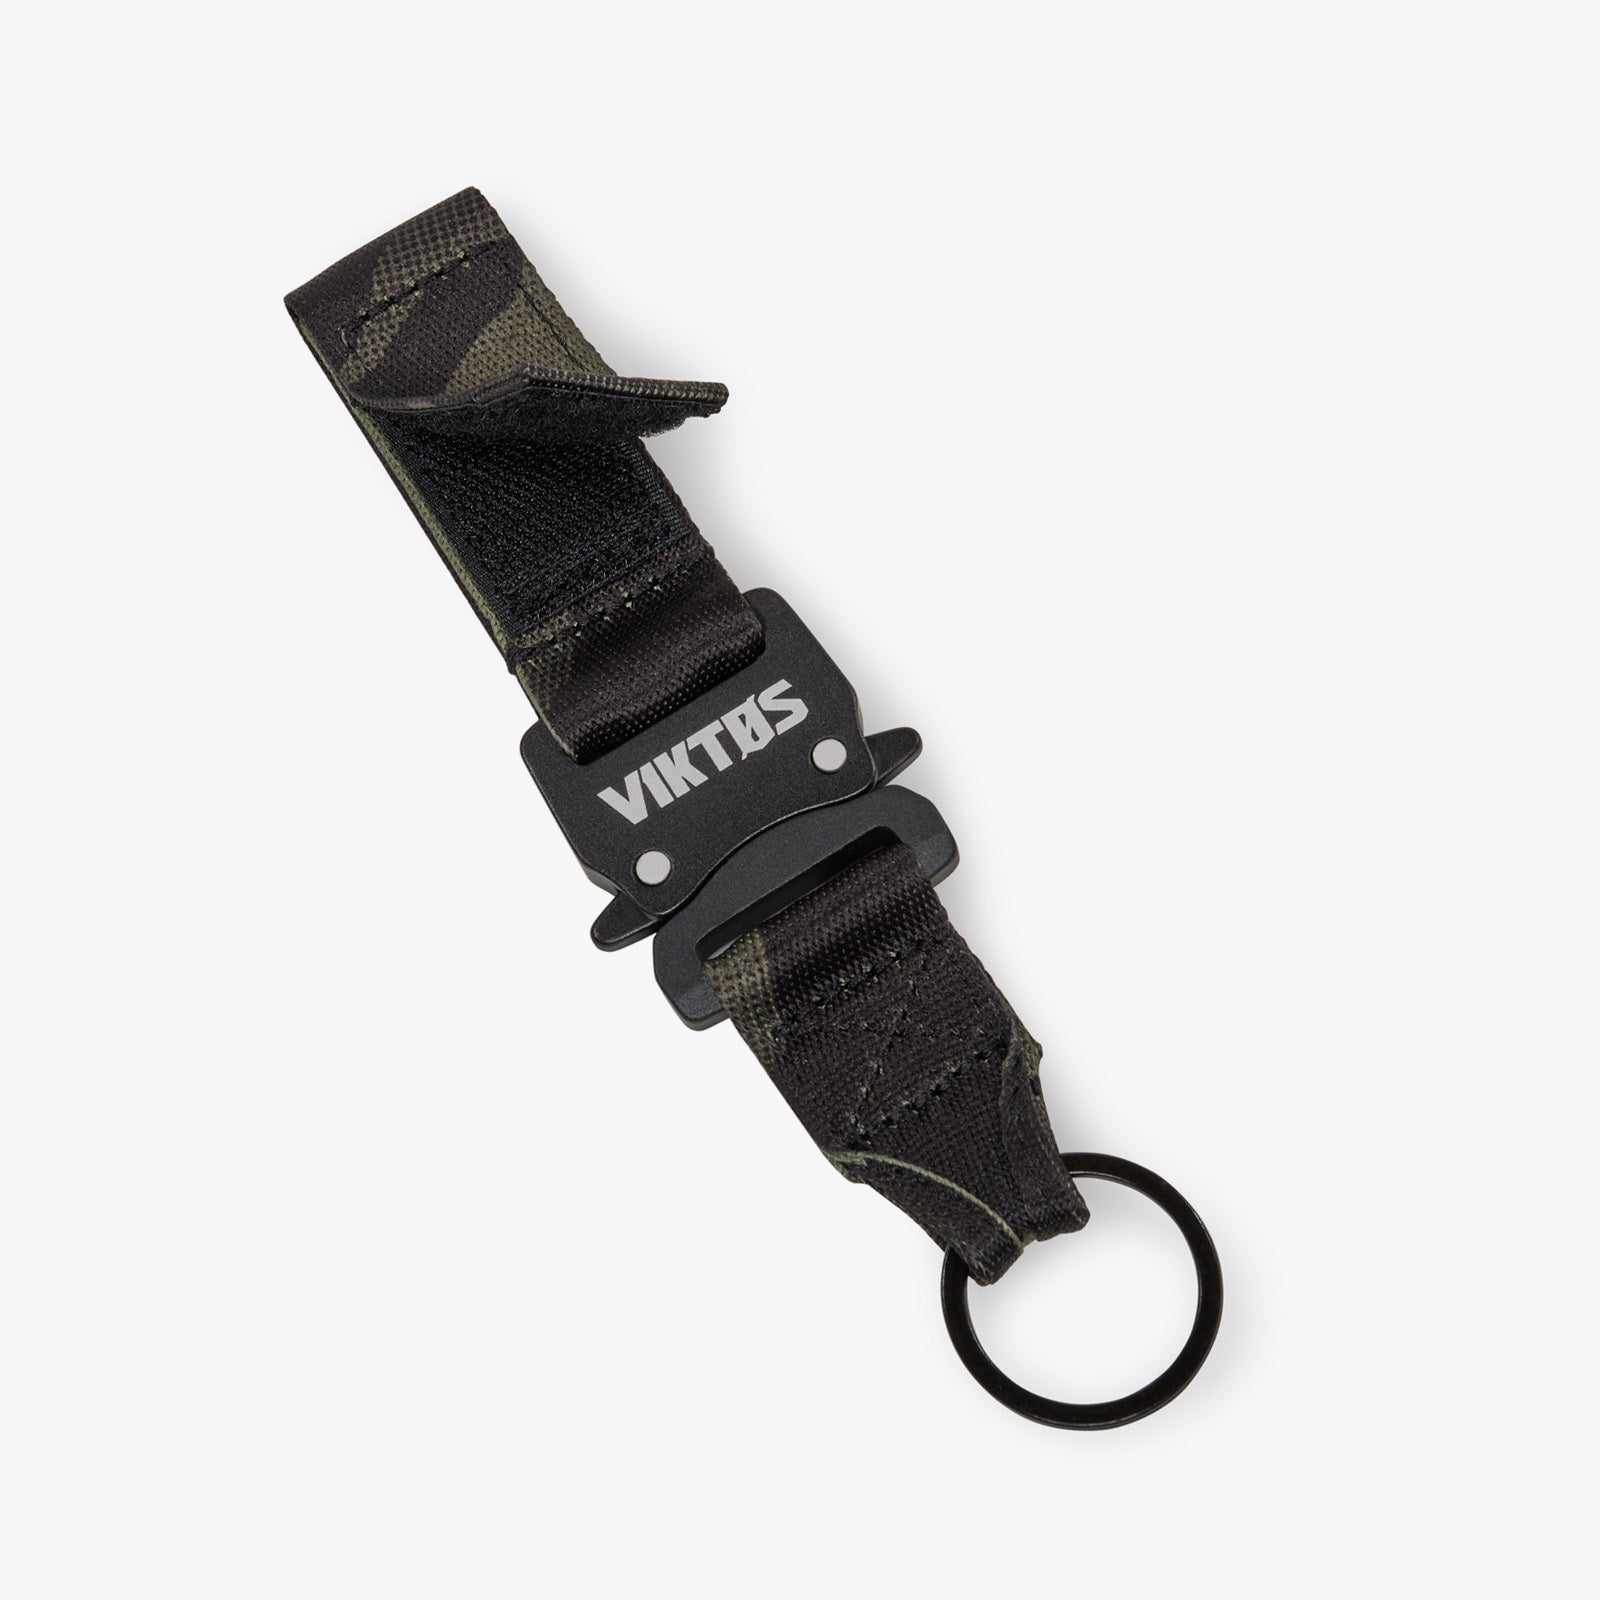 VIKTOS Bulldog Keychain Accessories VIKTOS Black Camo Tactical Gear Supplier Tactical Distributors Australia